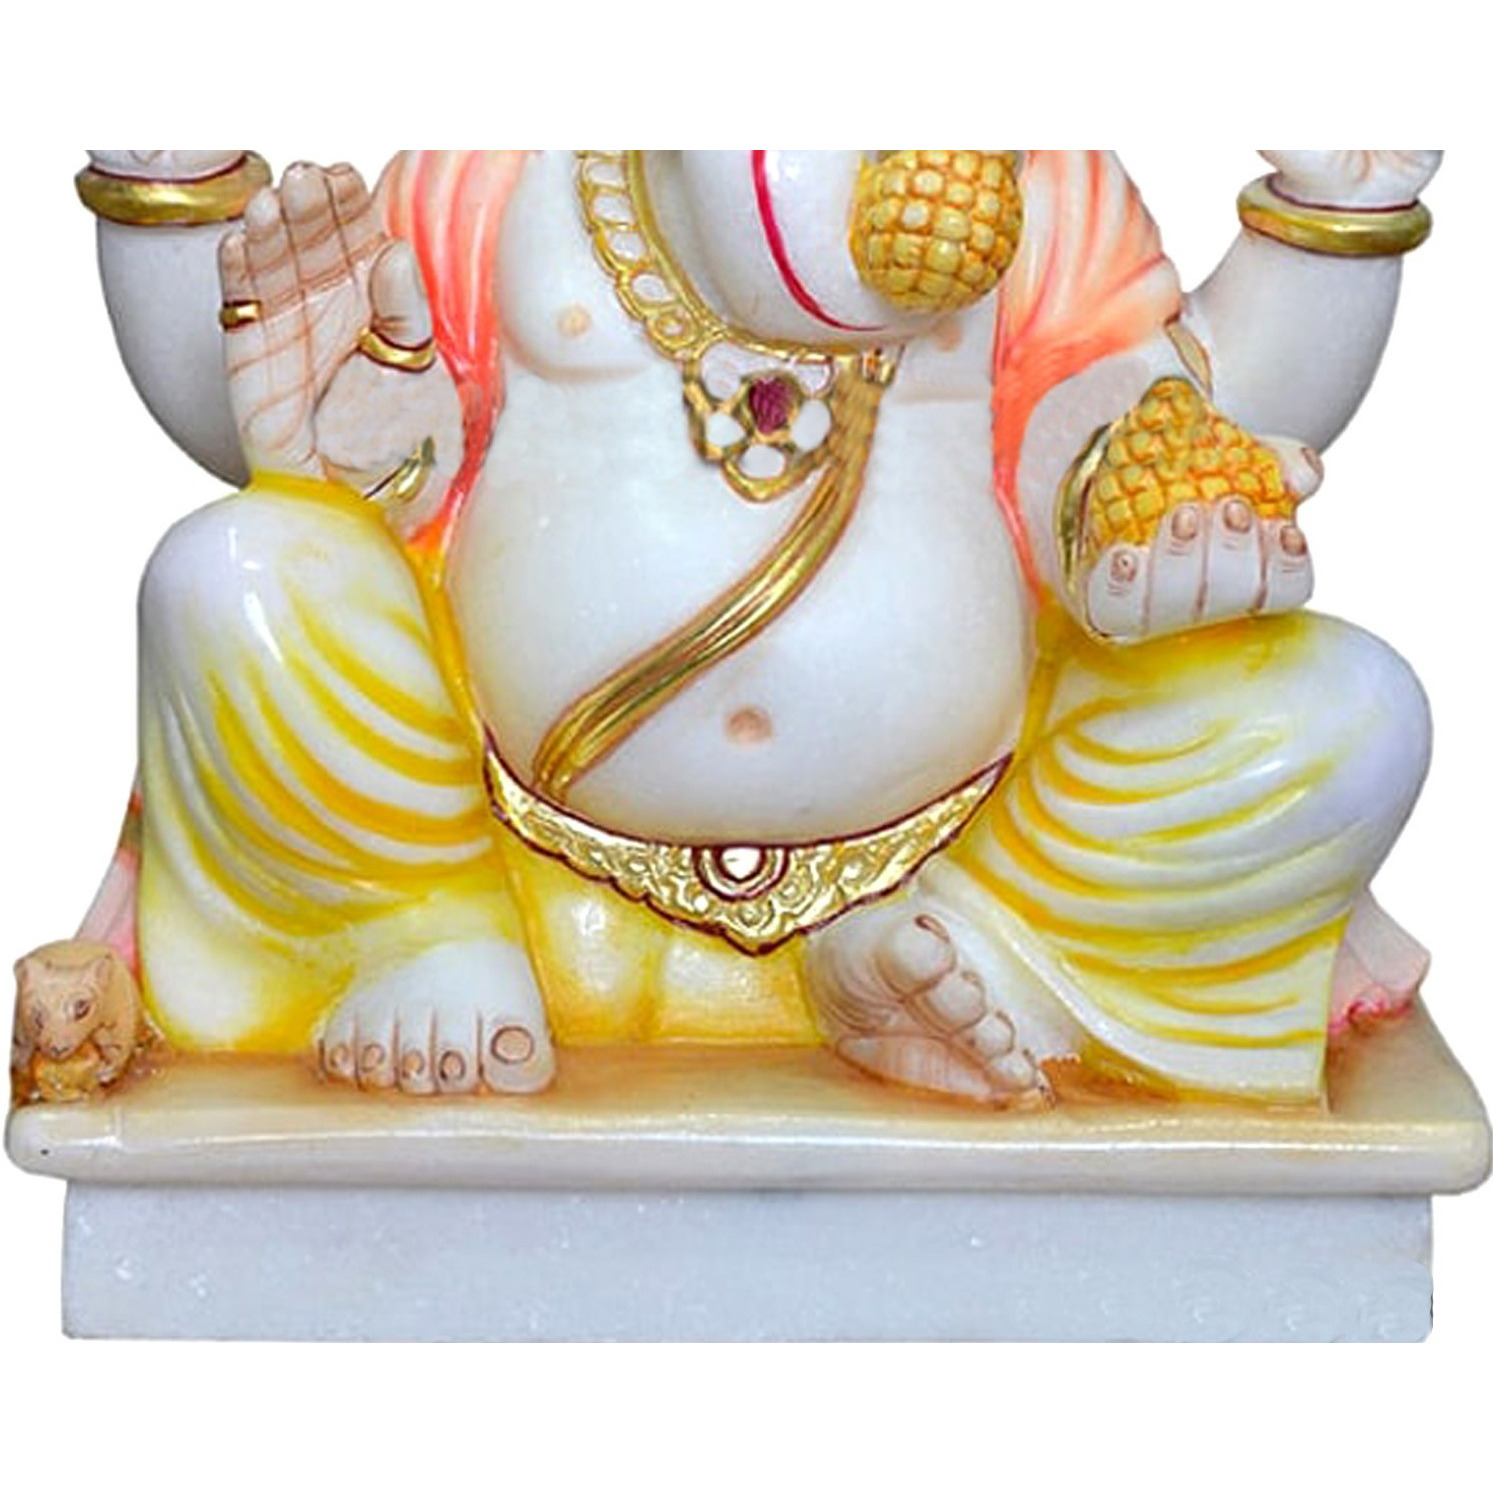 White Marble Ganesha Statue, Marble Turban Ganesha ,Marble God Statue, Beautiful Hand carved Marble Ganesha Sculpture, Perfect Diwali Gift